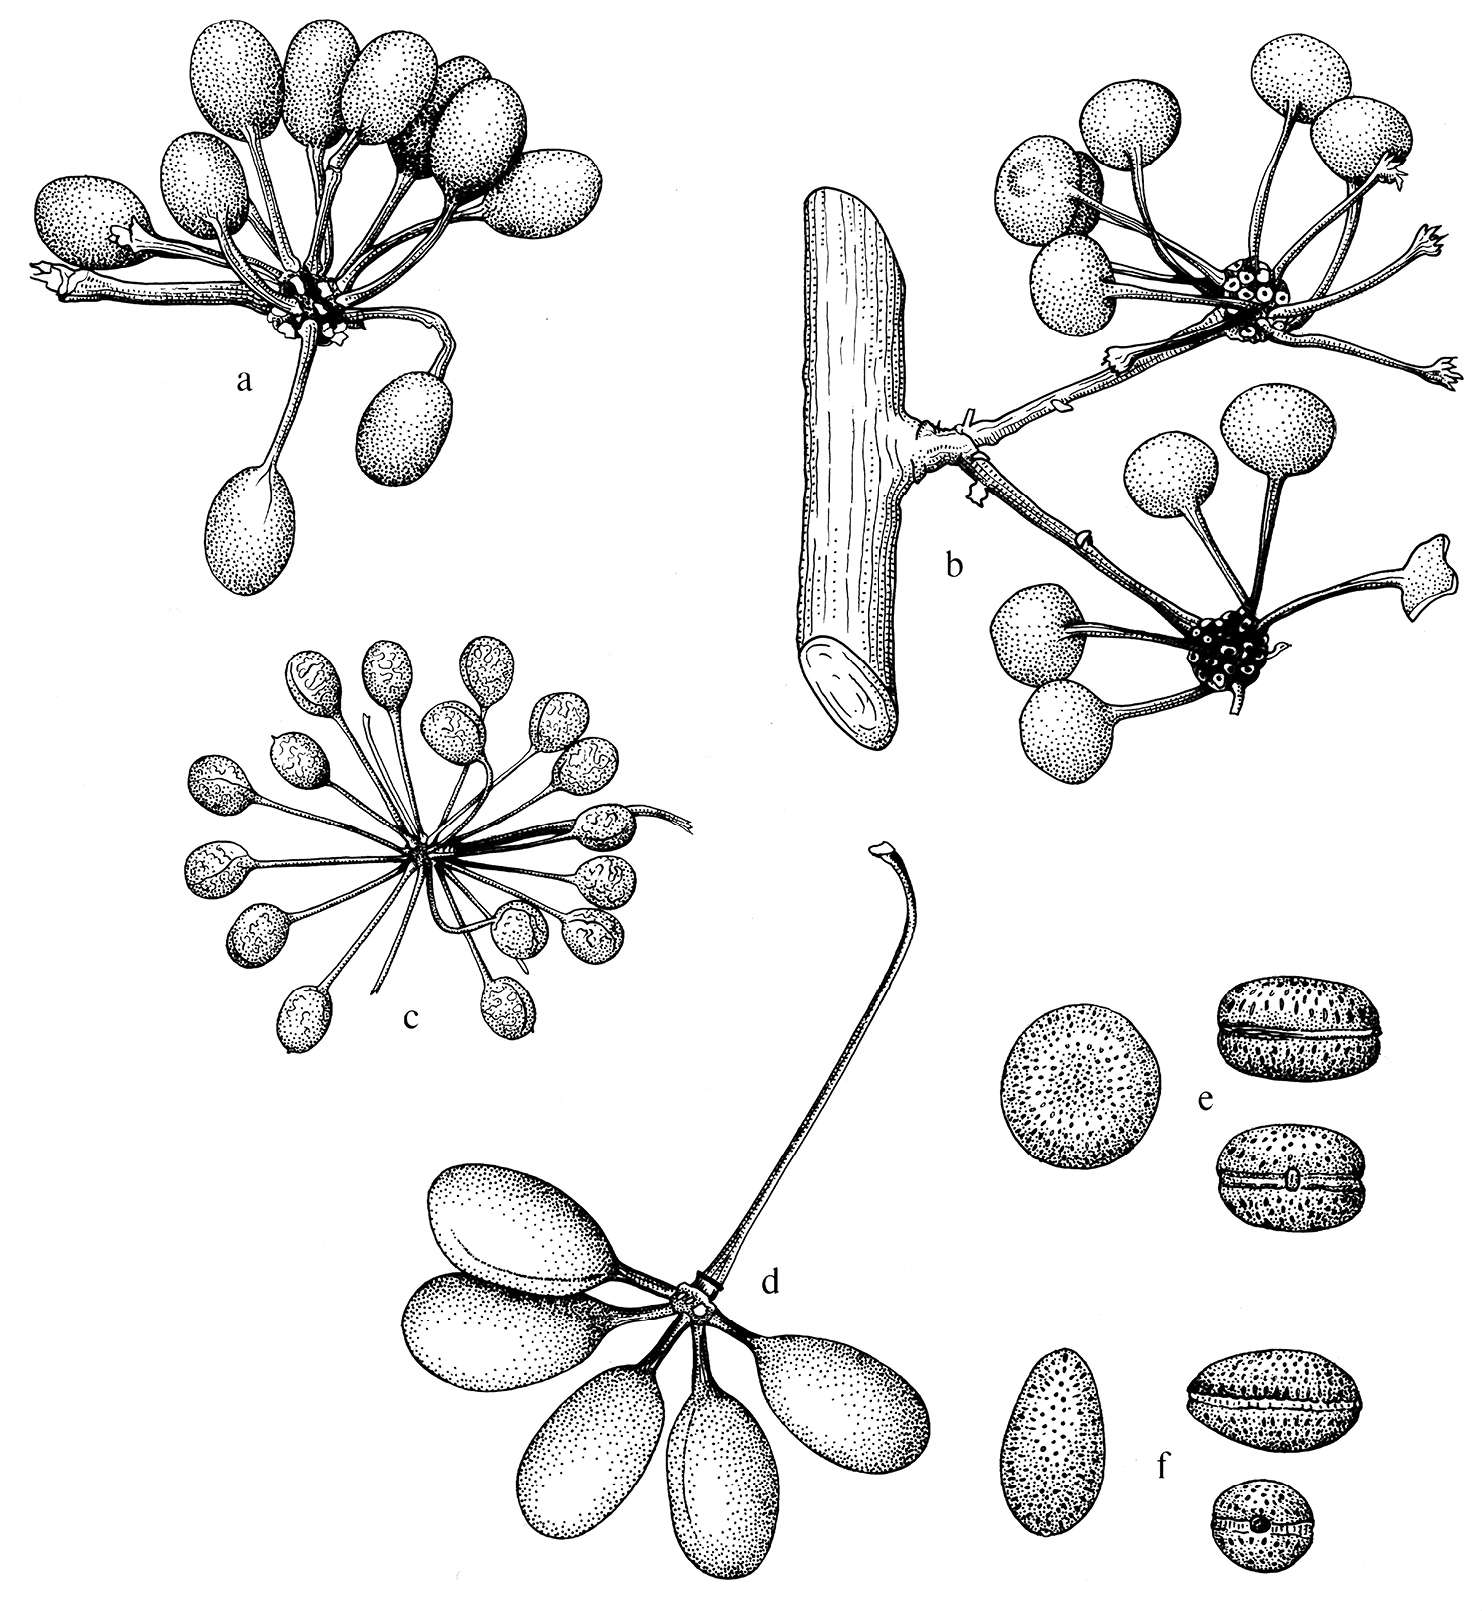 Image of Cremastosperma microcarpum R. E. Fr.